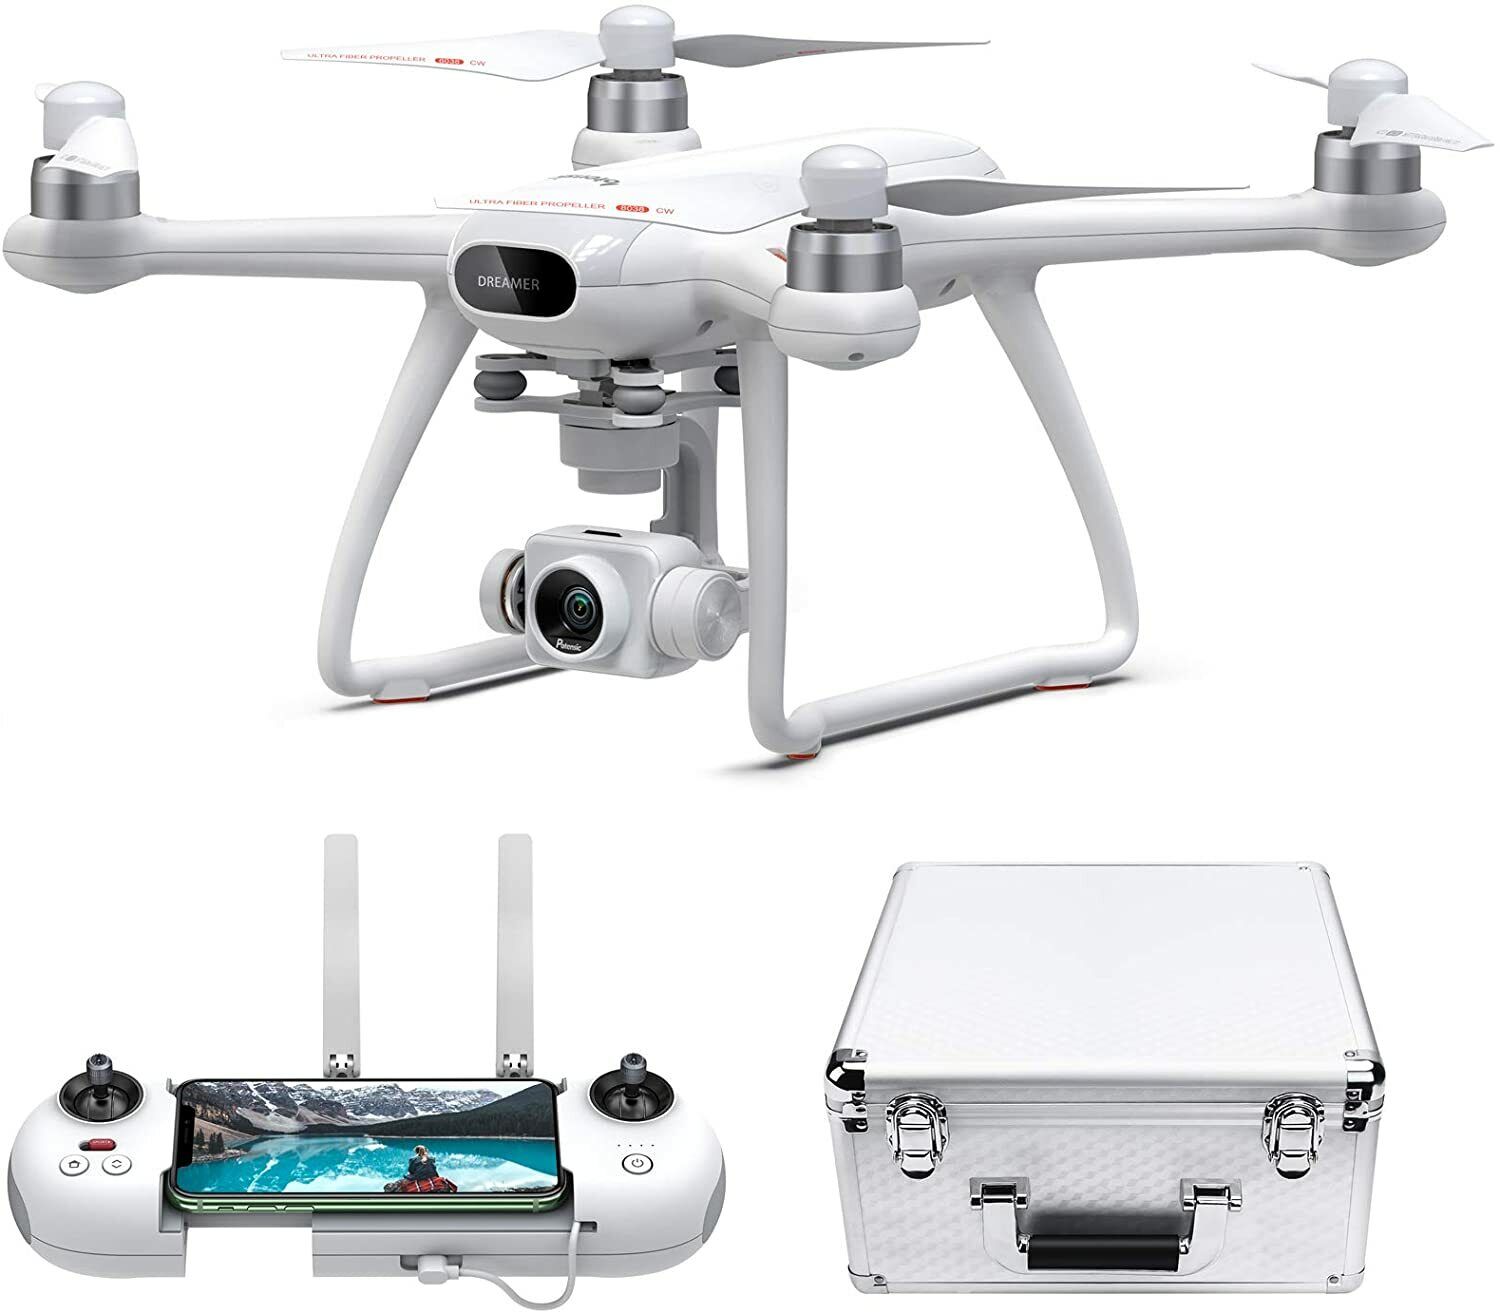 Potensic Dreamer Pro Drone 4K Camera Quadcopter